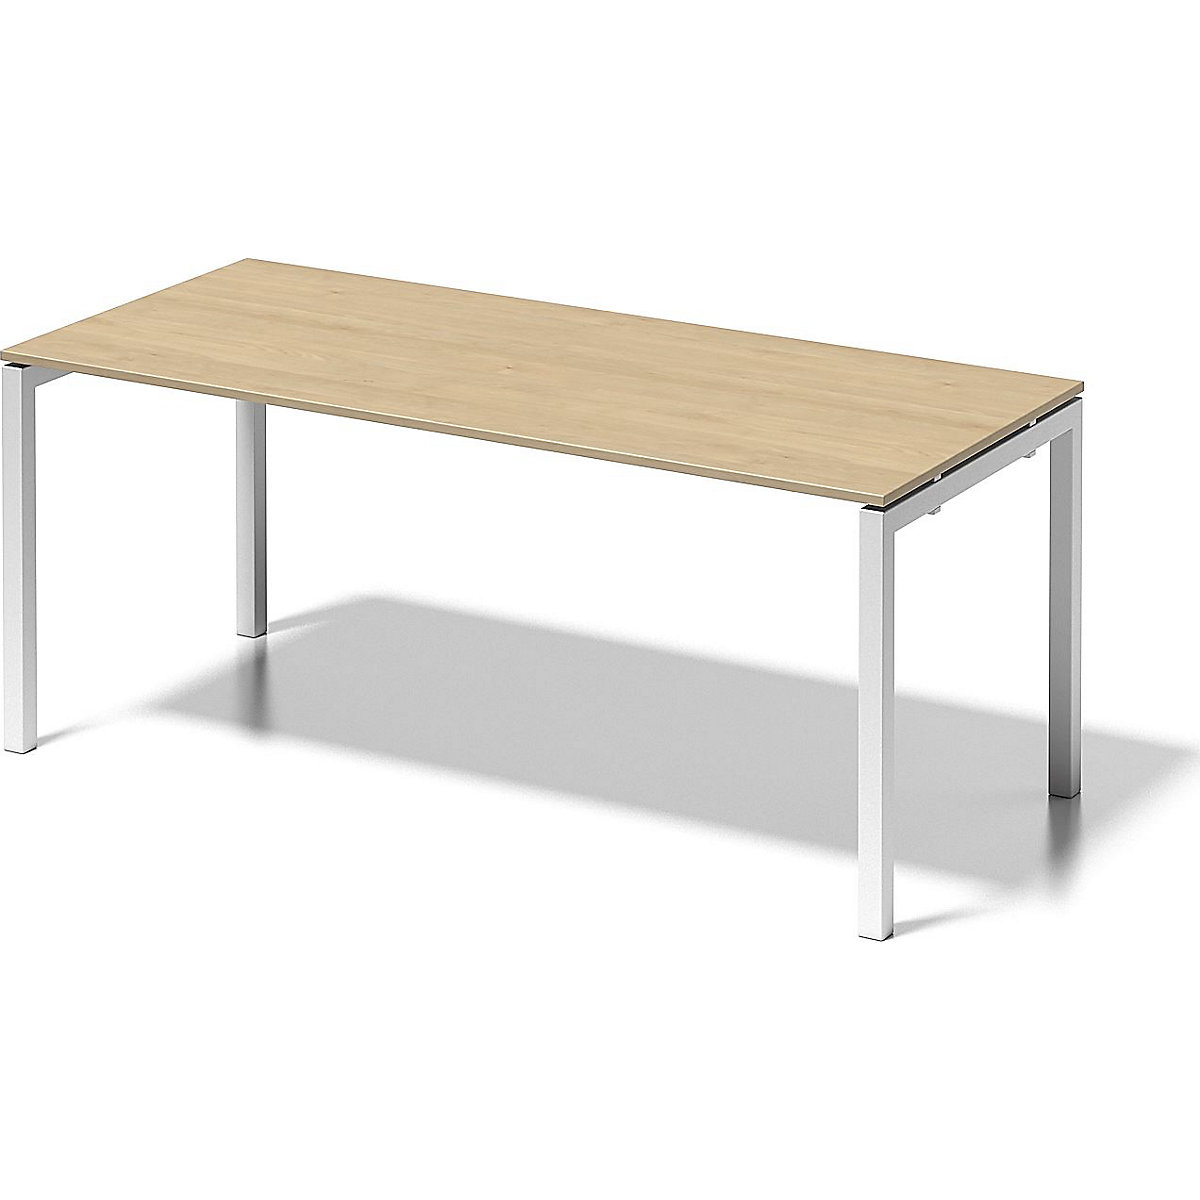 CITO desk, U-frame – BISLEY, HxWxD 740 x 1800 x 800 mm, white frame, maple tabletop-5